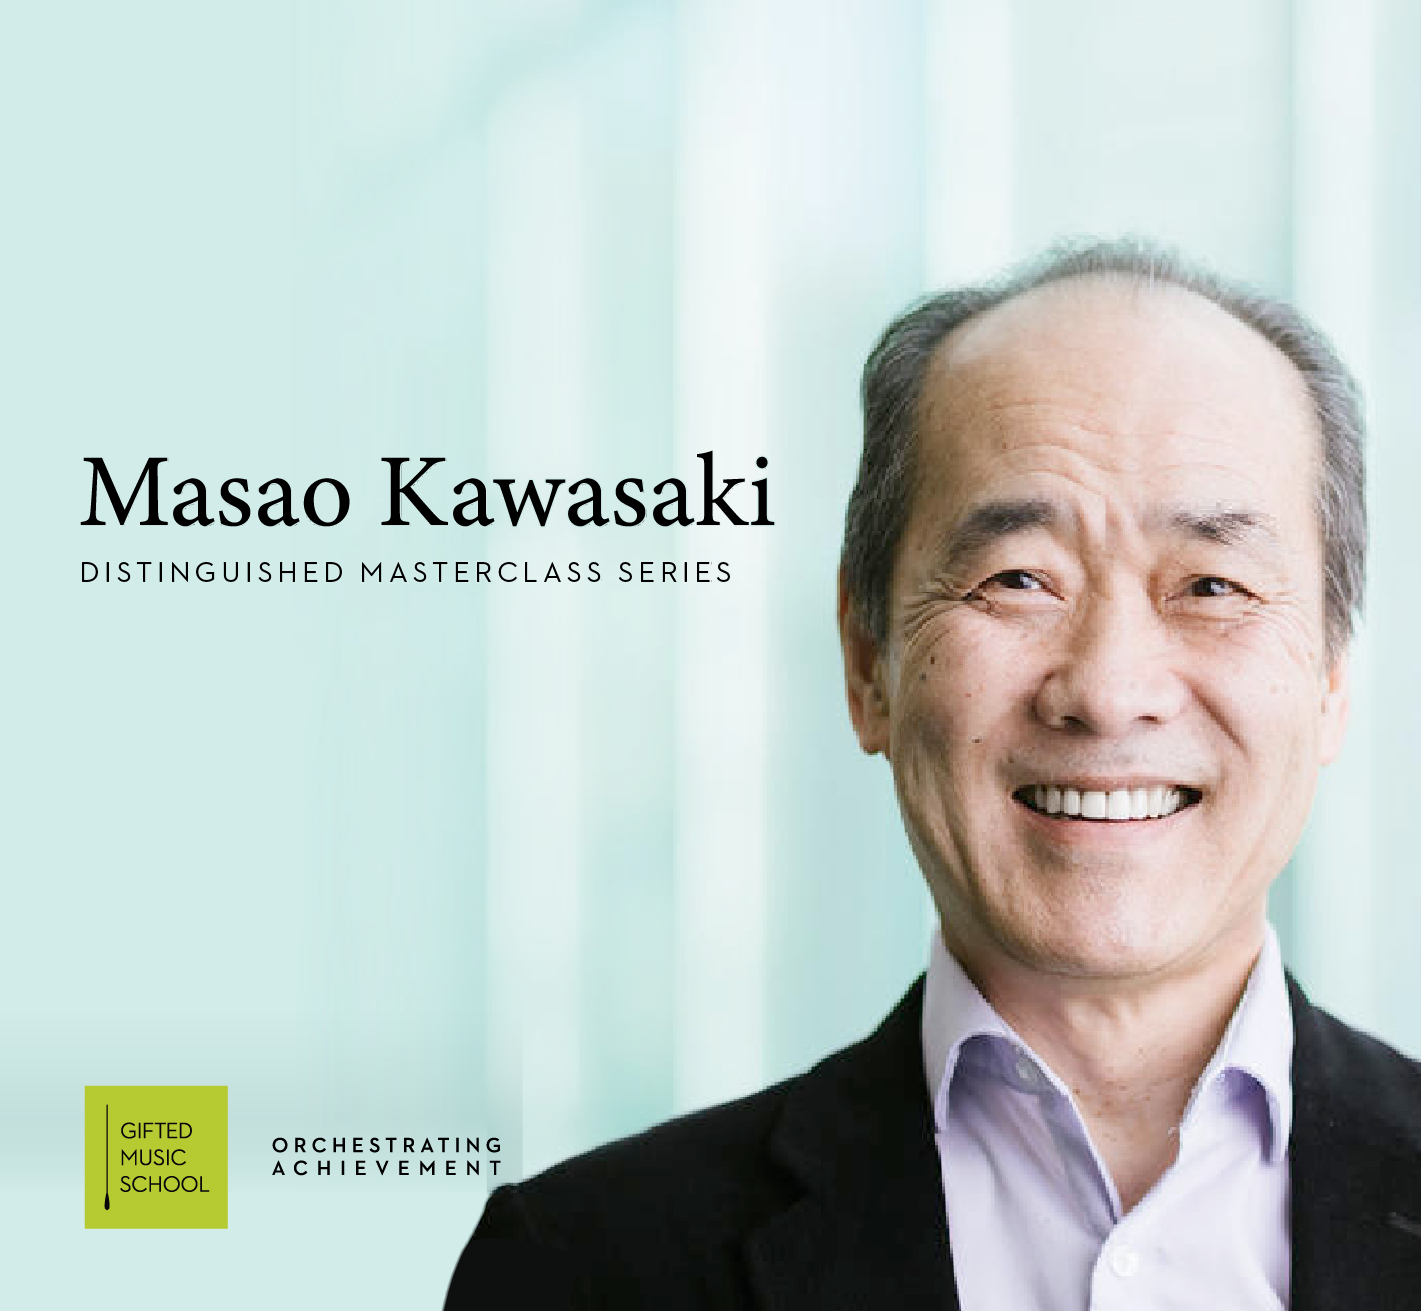 Masao Kawasaki violin masterclass image